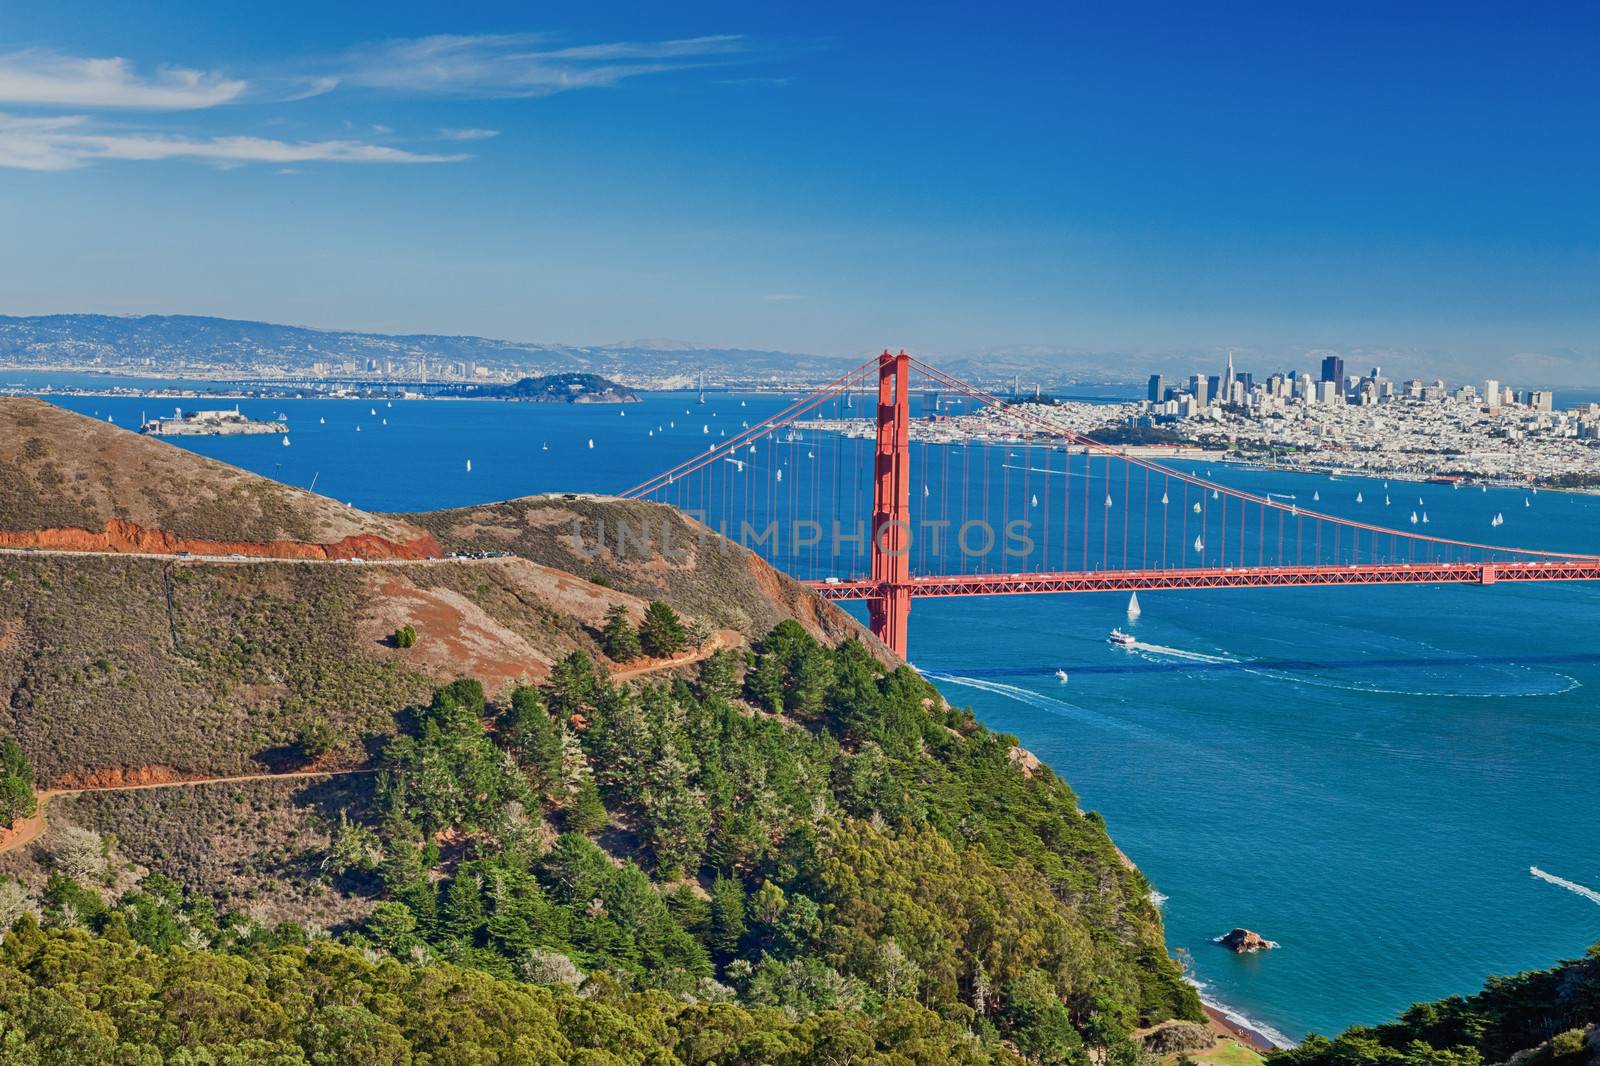 San Francisco With Golden Gate bridge and Alcatraz